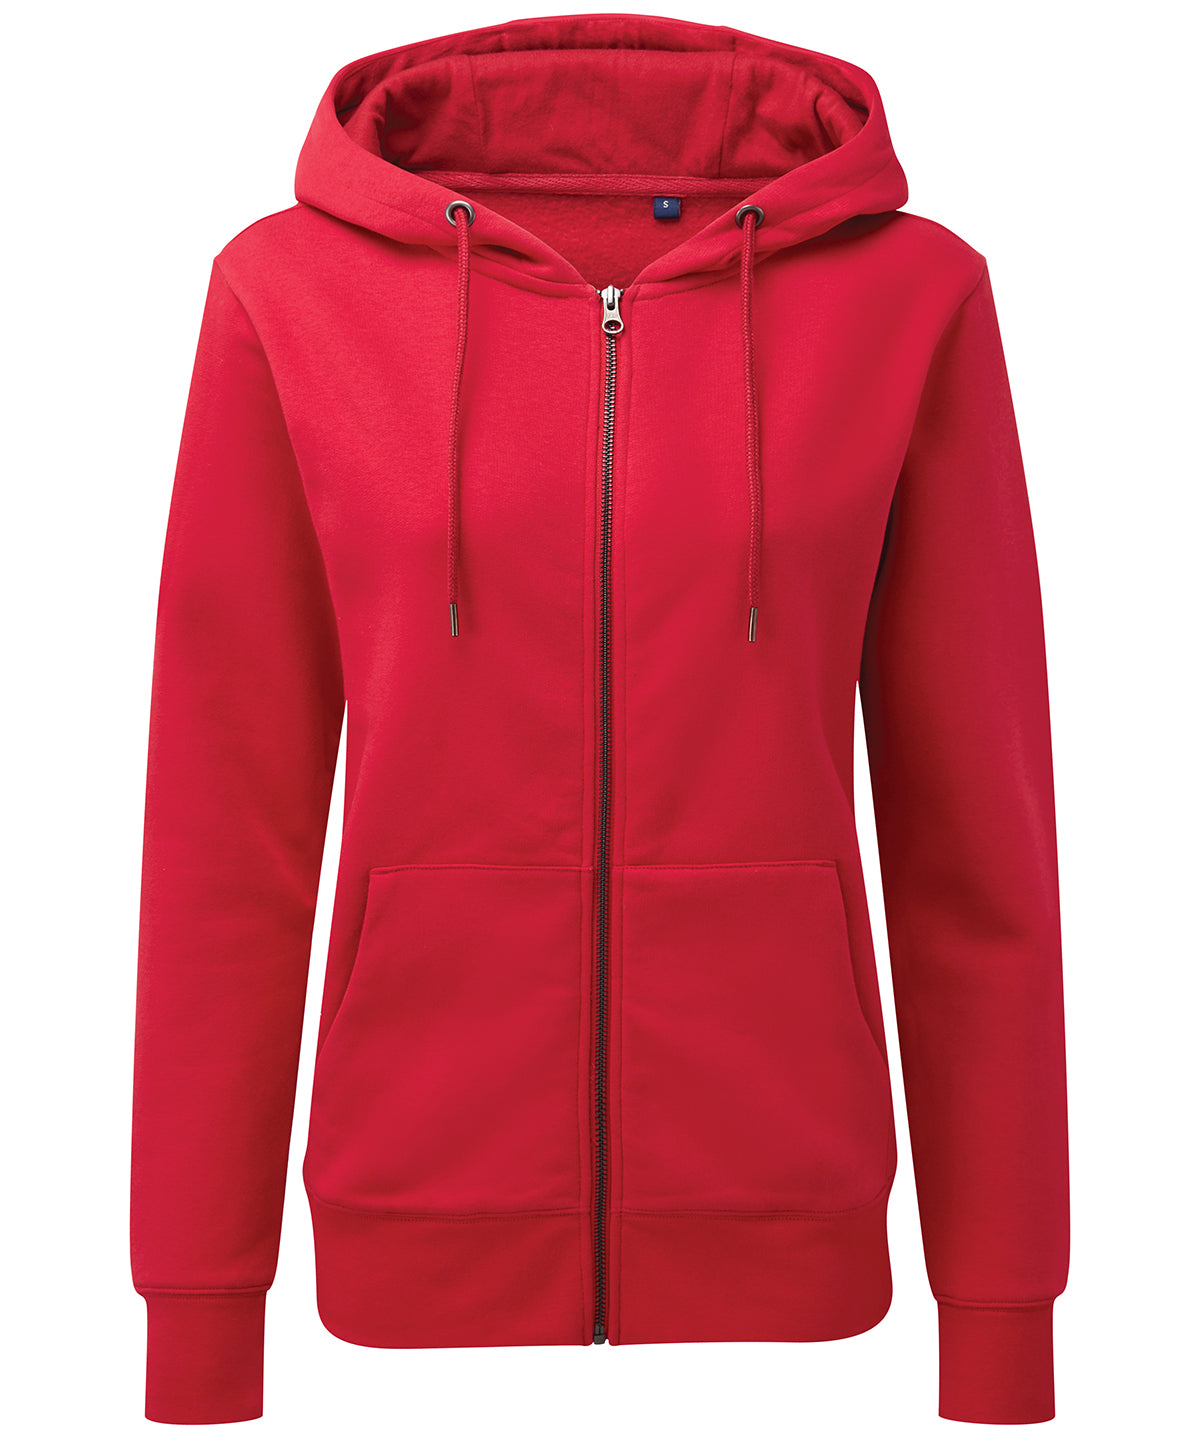 Personalised Hoodies - Turquoise Asquith & Fox Women's zip-through organic hoodie